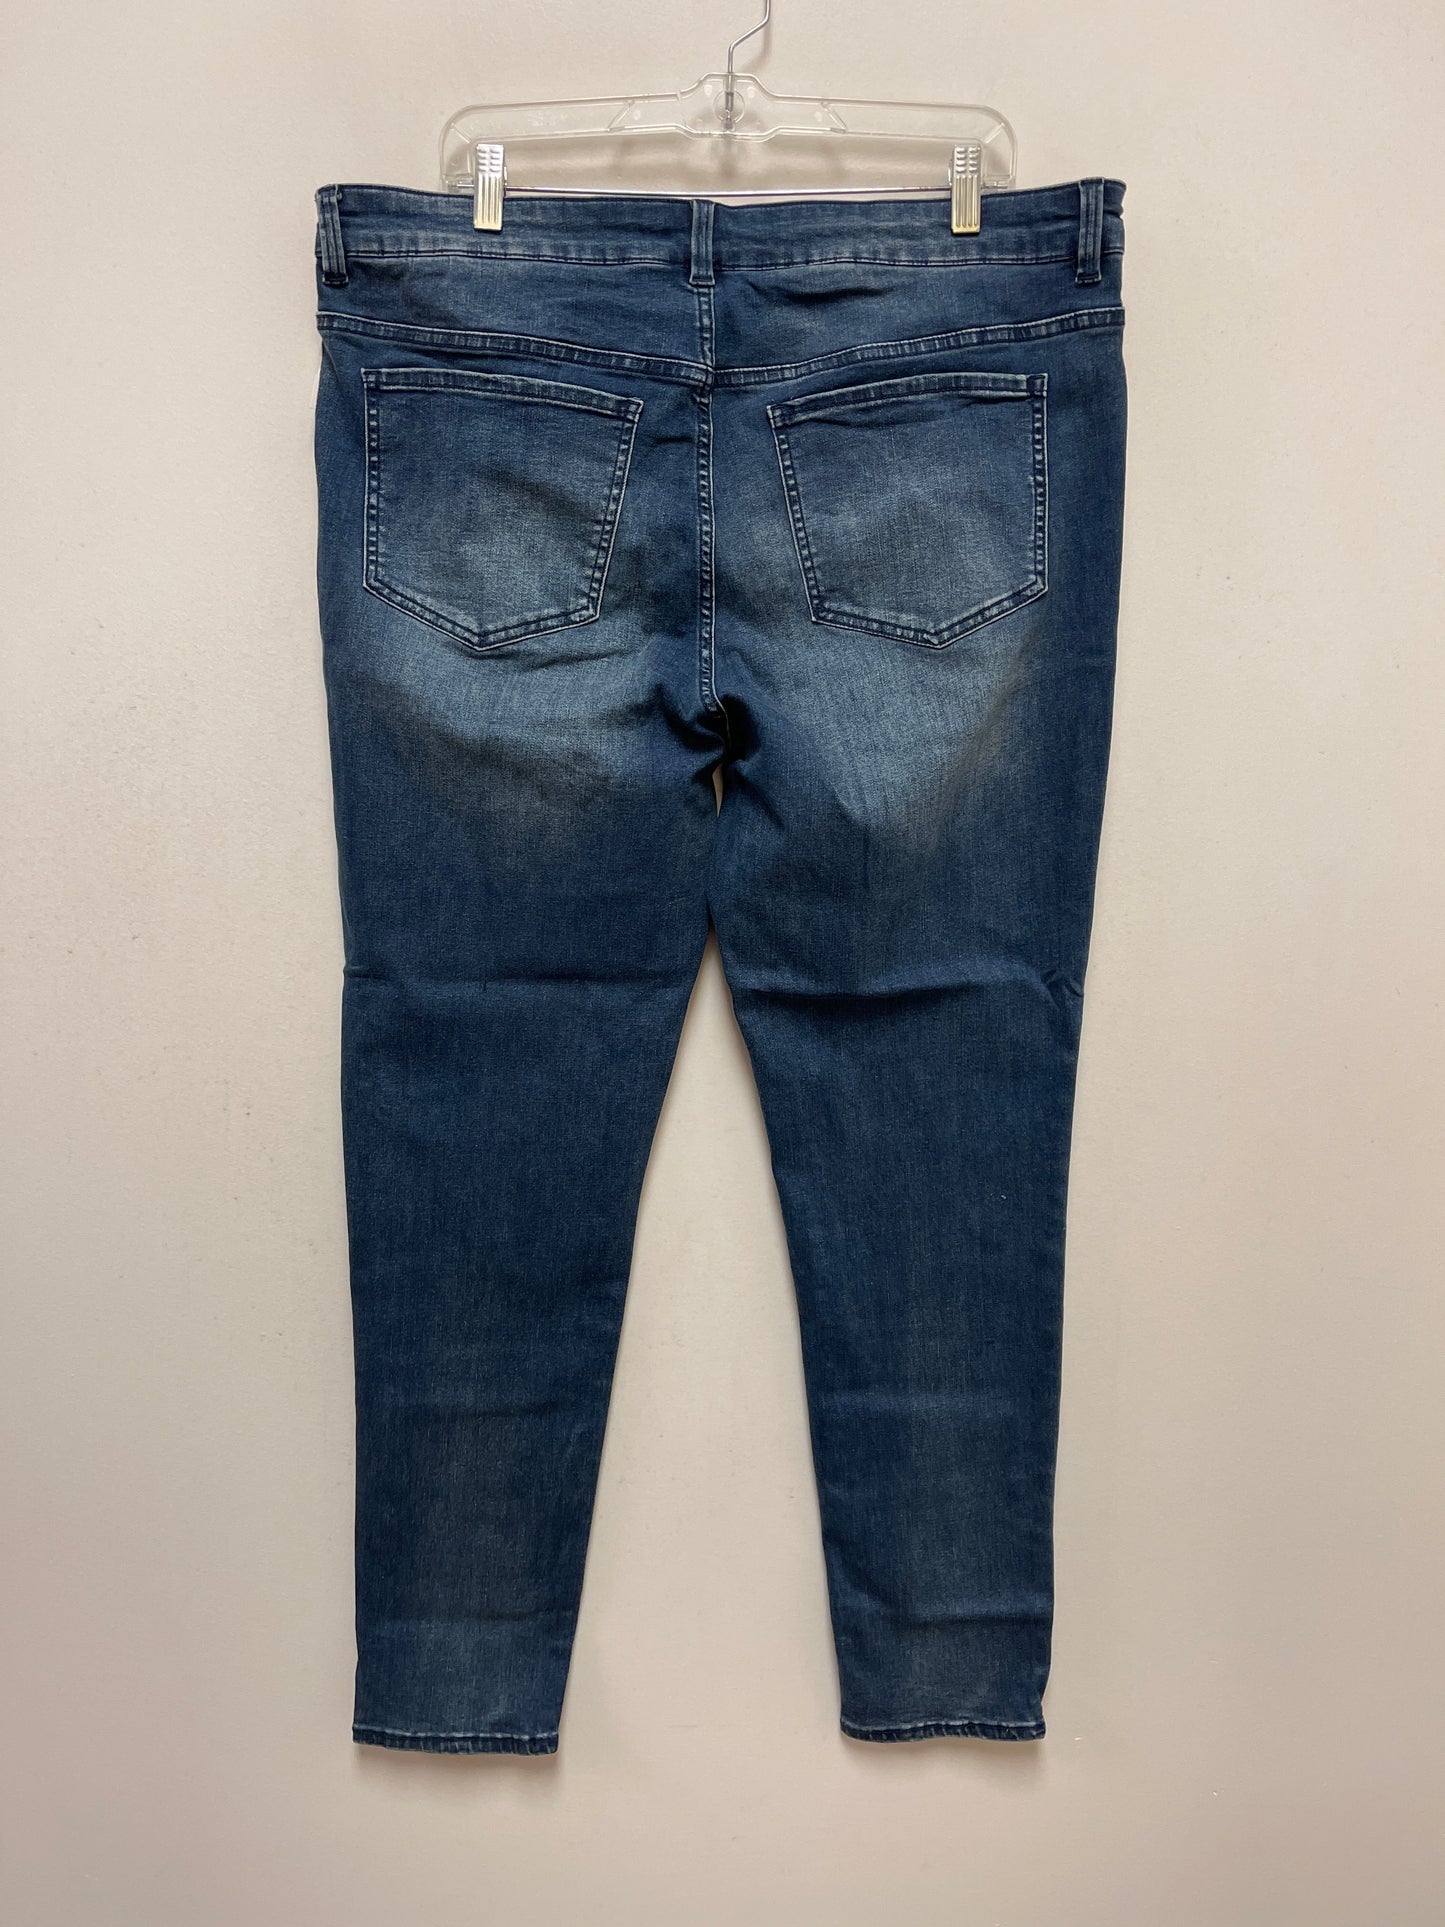 Blue Denim Jeans Skinny Clothes Mentor, Size 18